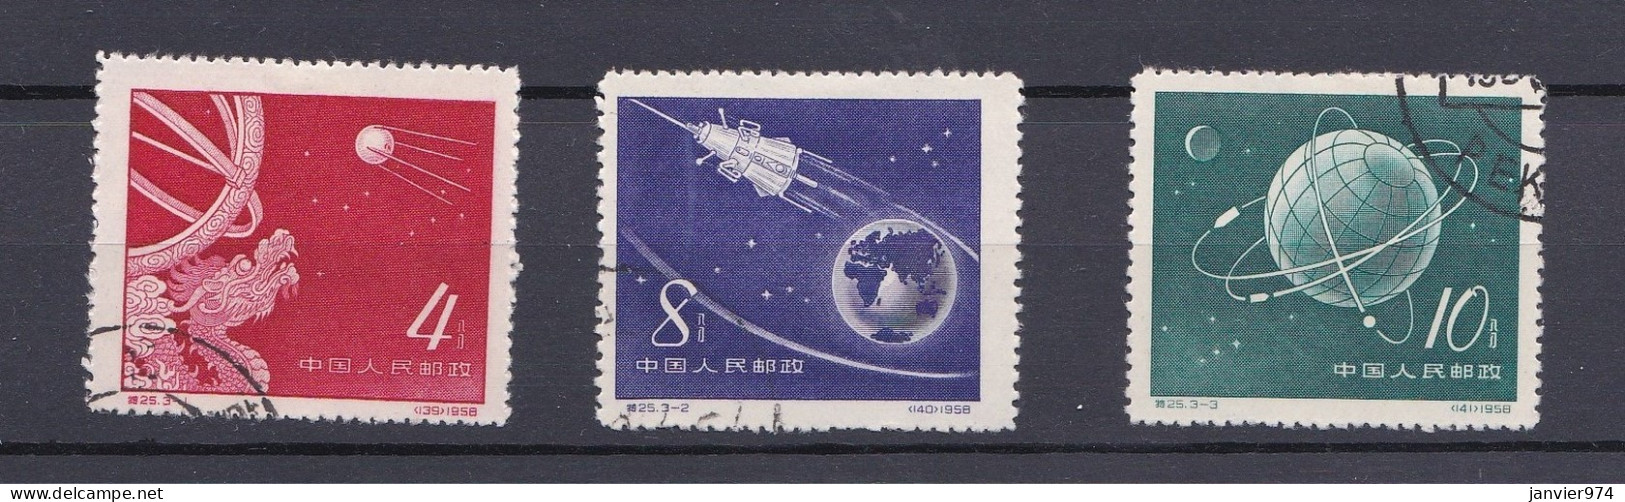 Chine 1958 , La Serie Complete Satellites – Spoutniks , 3 Timbres . 407 à 40 - Used Stamps